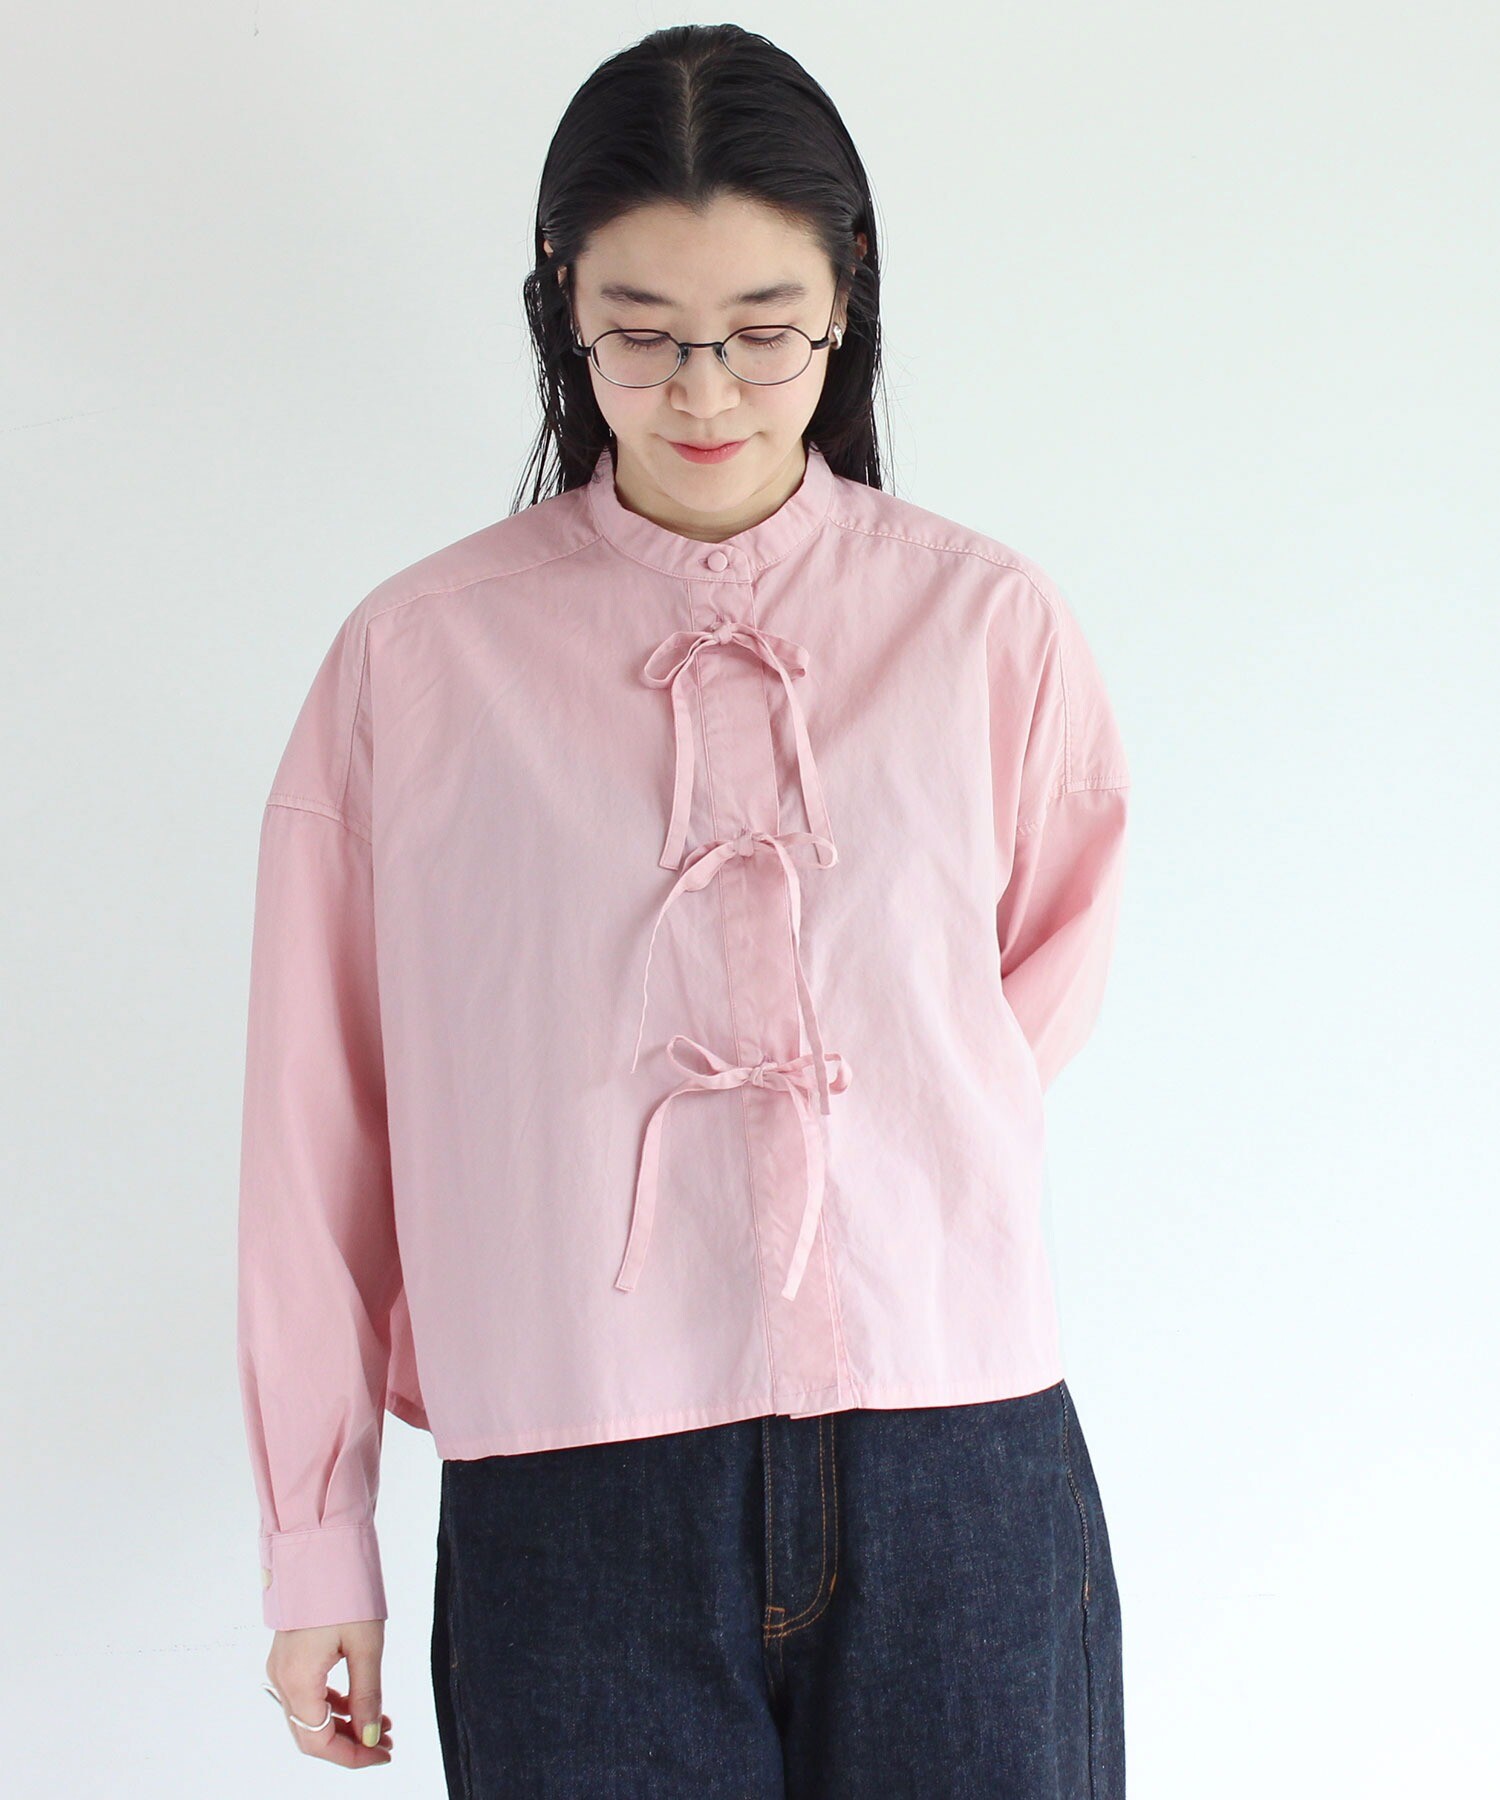 AMBIDEX Store ribbon blouse(F ピンク): l'atelier du savon